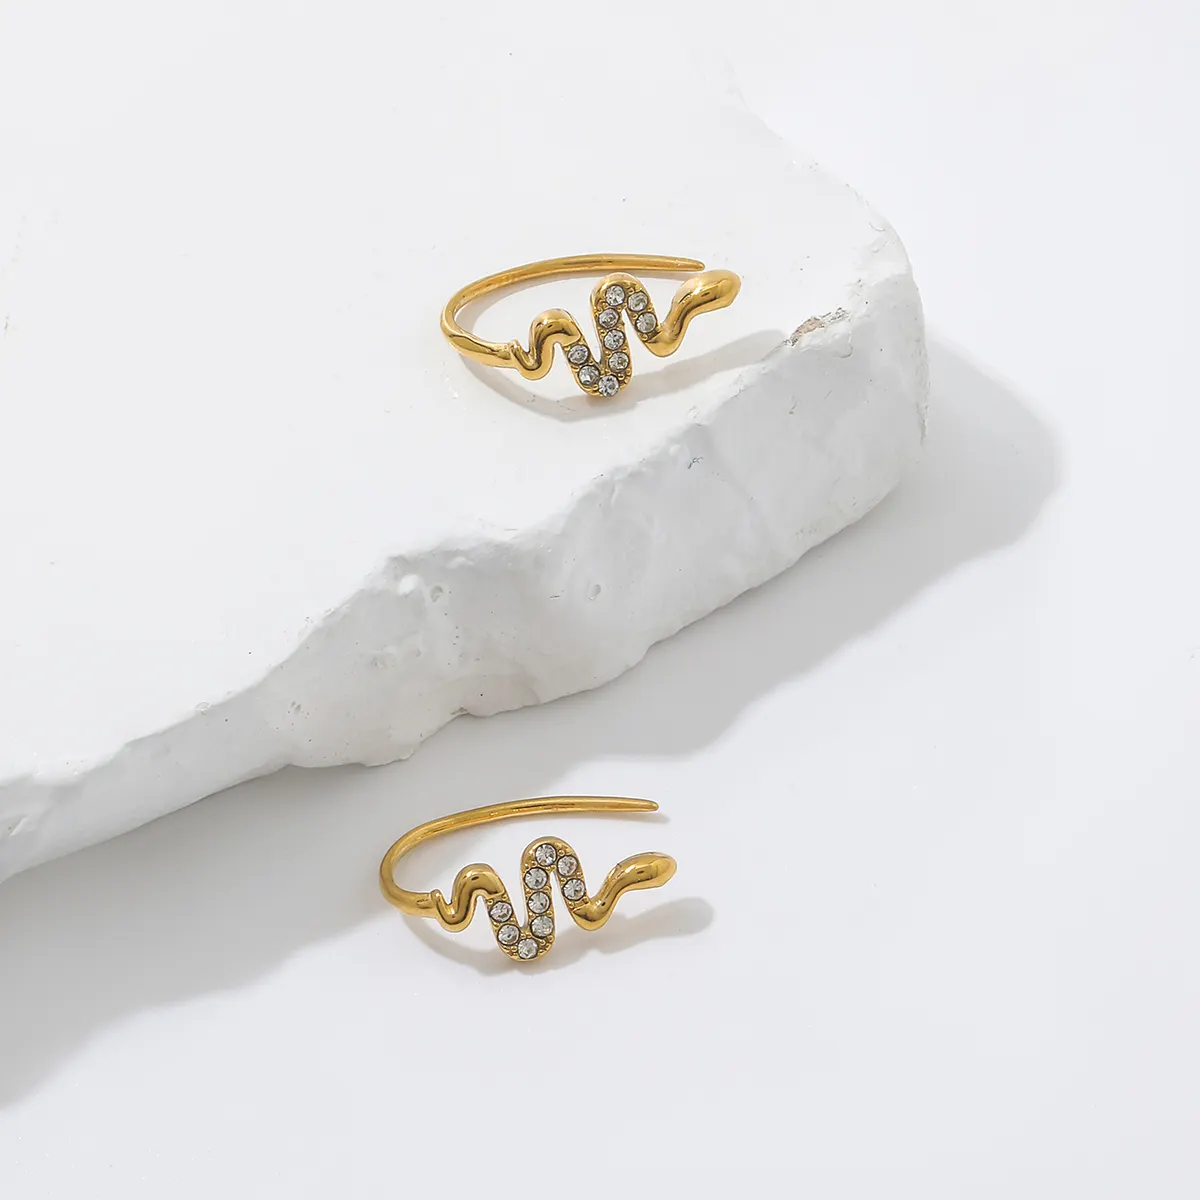 Ruigang Custom 18k Gold Plated Premium Jewelry Female Stainless Steel Snake Earrings With Full Zircon Stones Earrings Clips